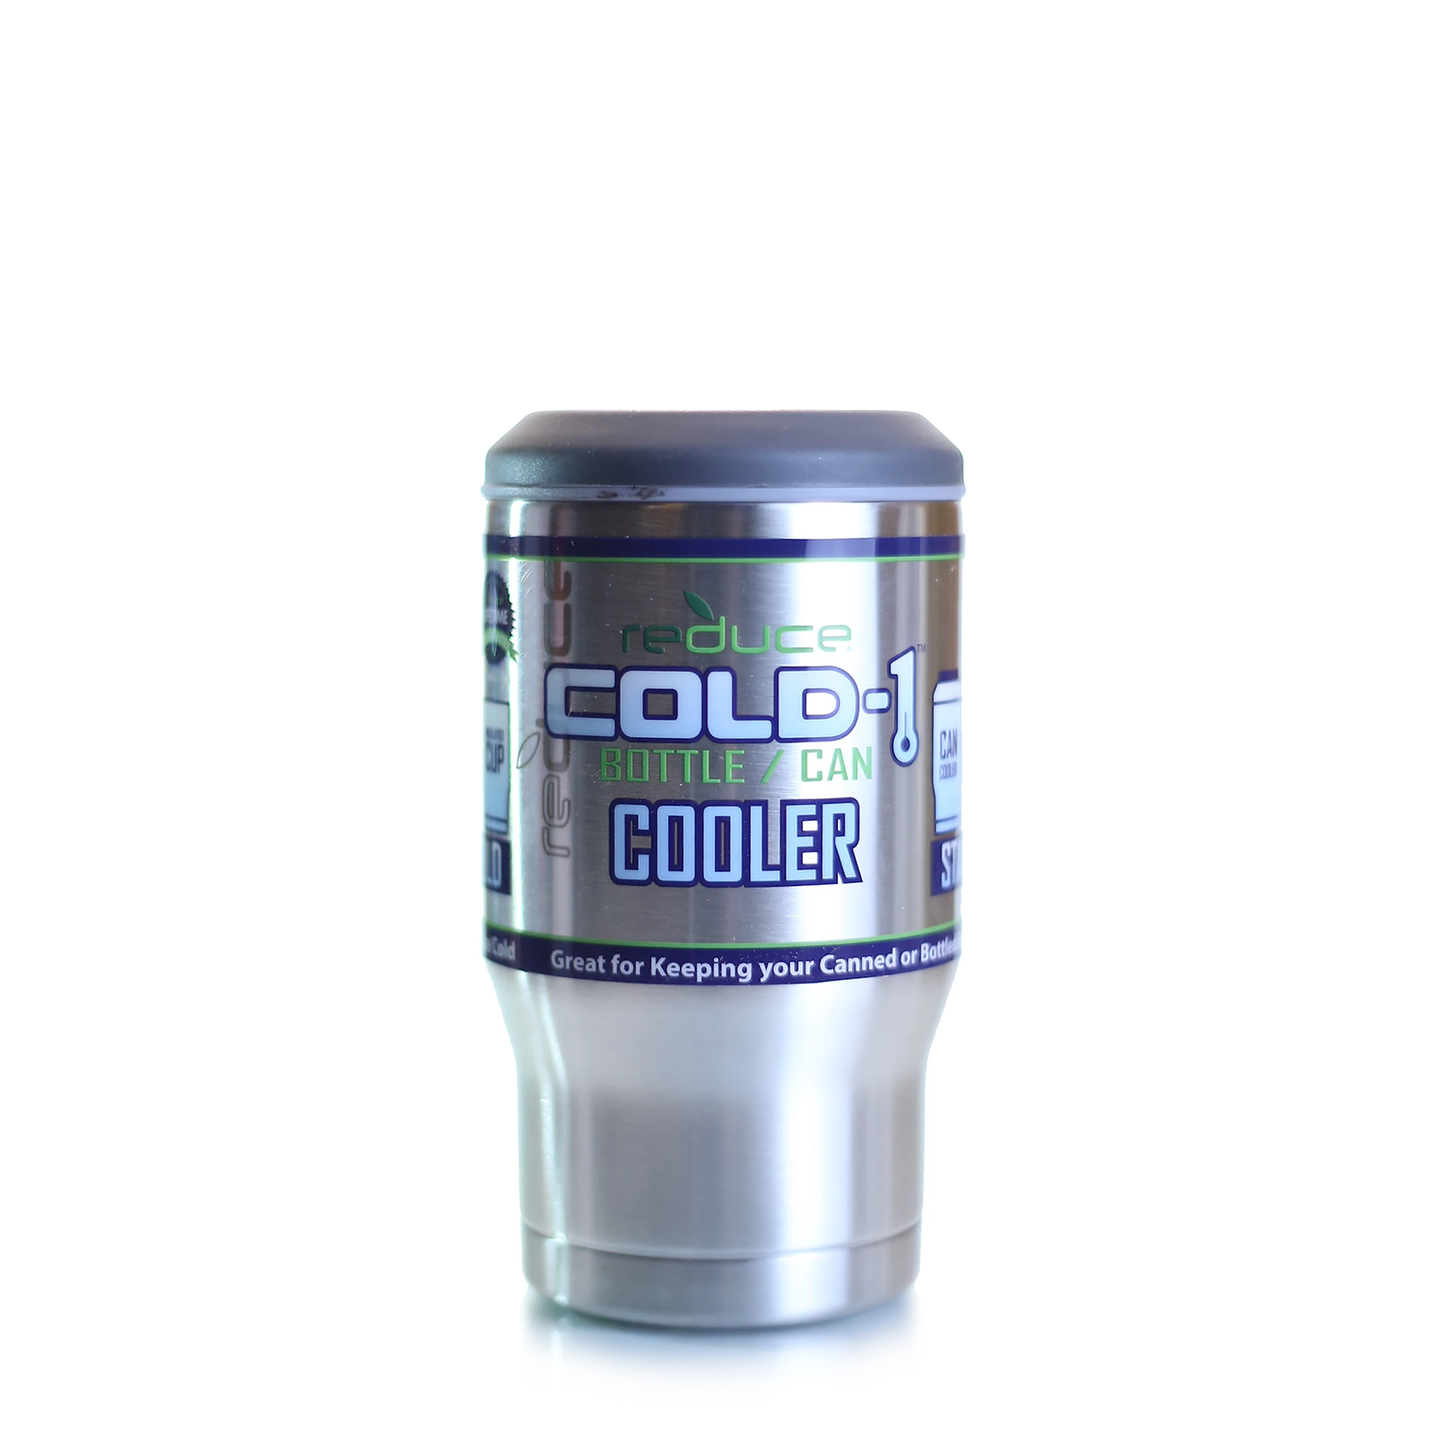 REDUCE COLD-1 CAN/BOTTLE COOLER CASE (24 units)